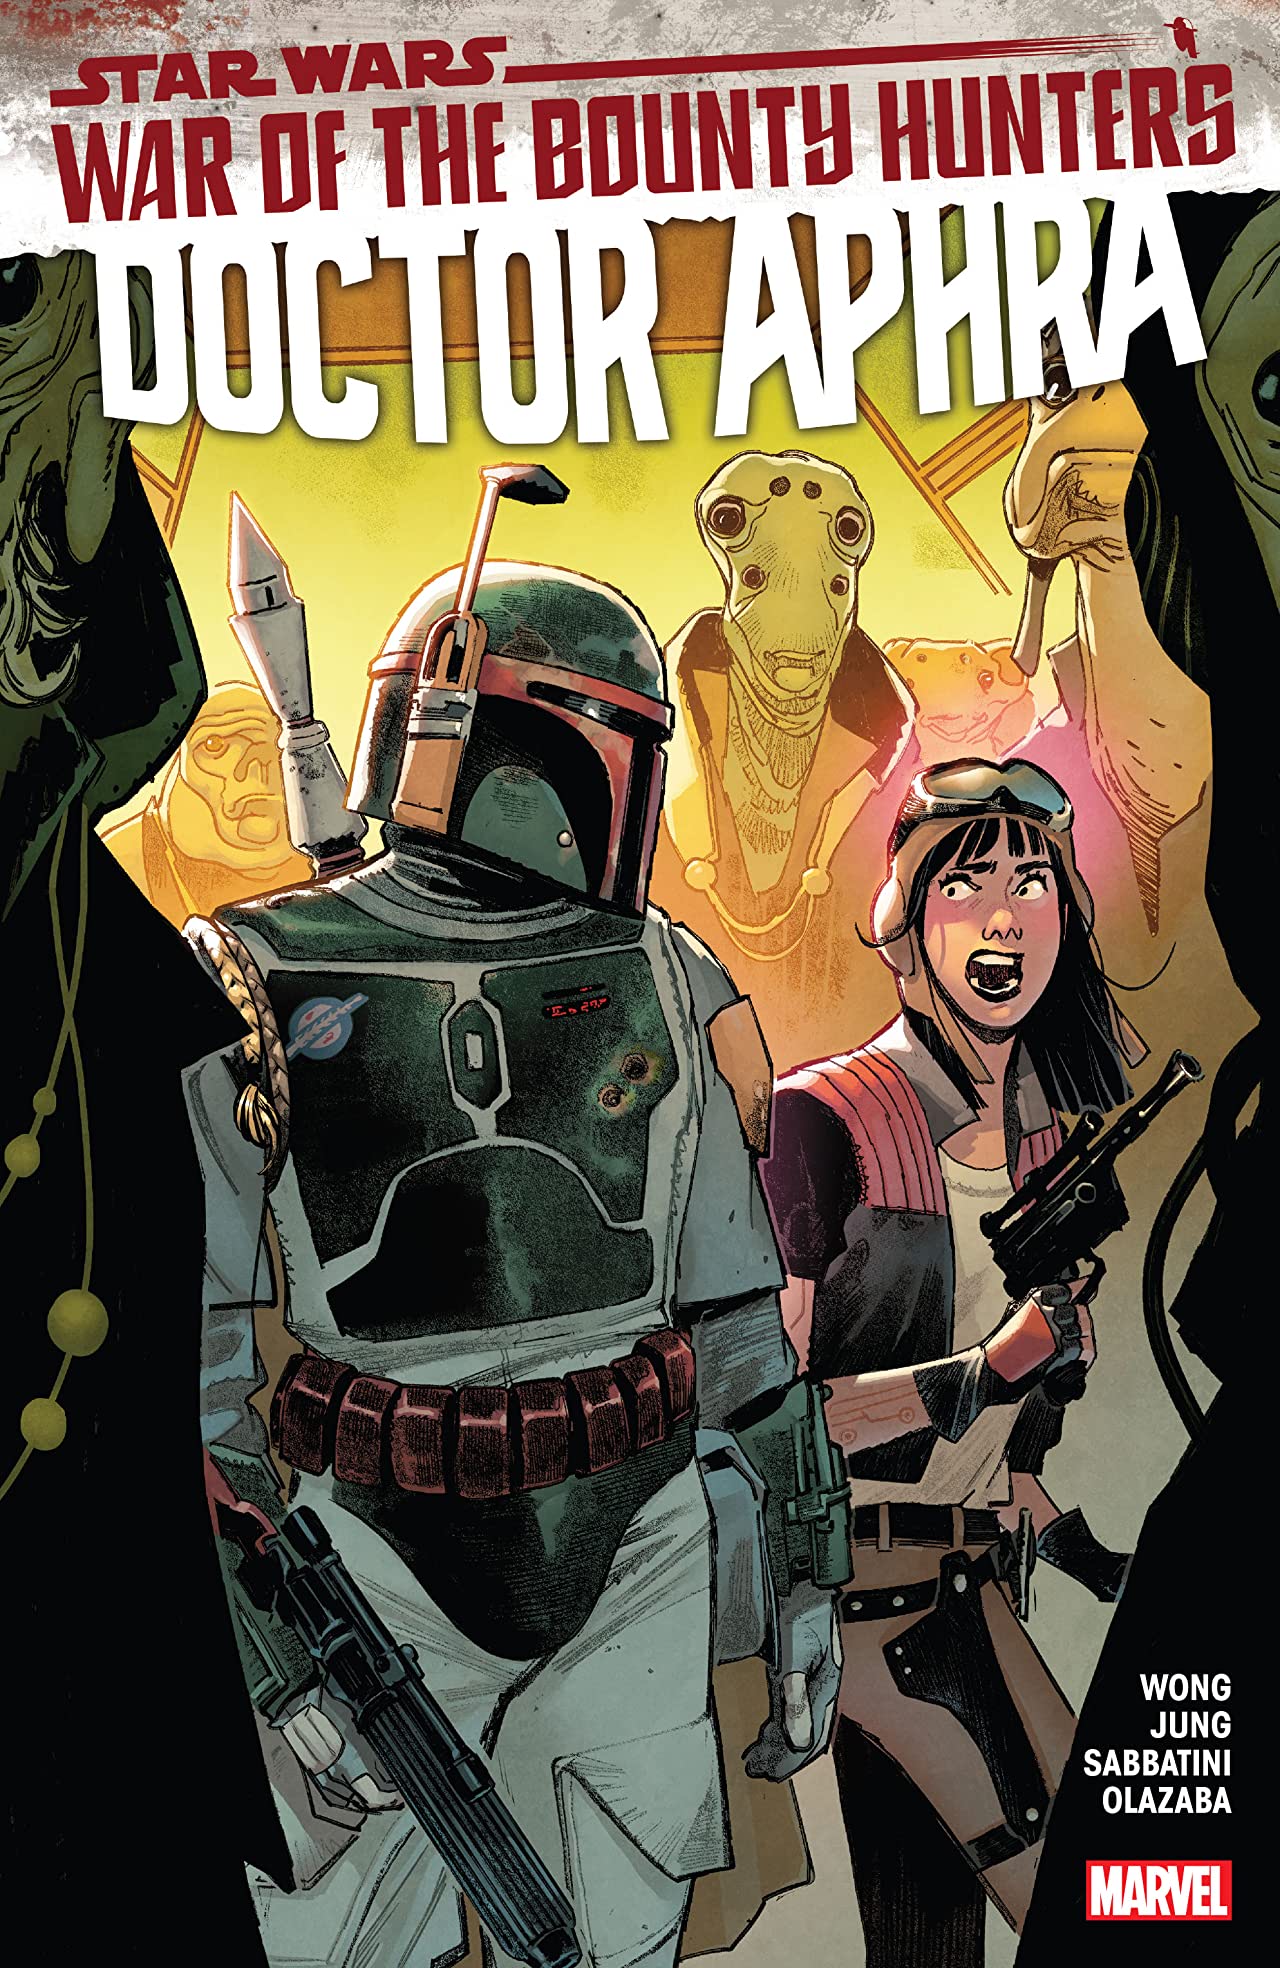 Star Wars: Doctor Aphra Vol. 3 - War Of The Bounty Hunters Vol. 3: War Of The Bounty Hunters (Trade Paperback)